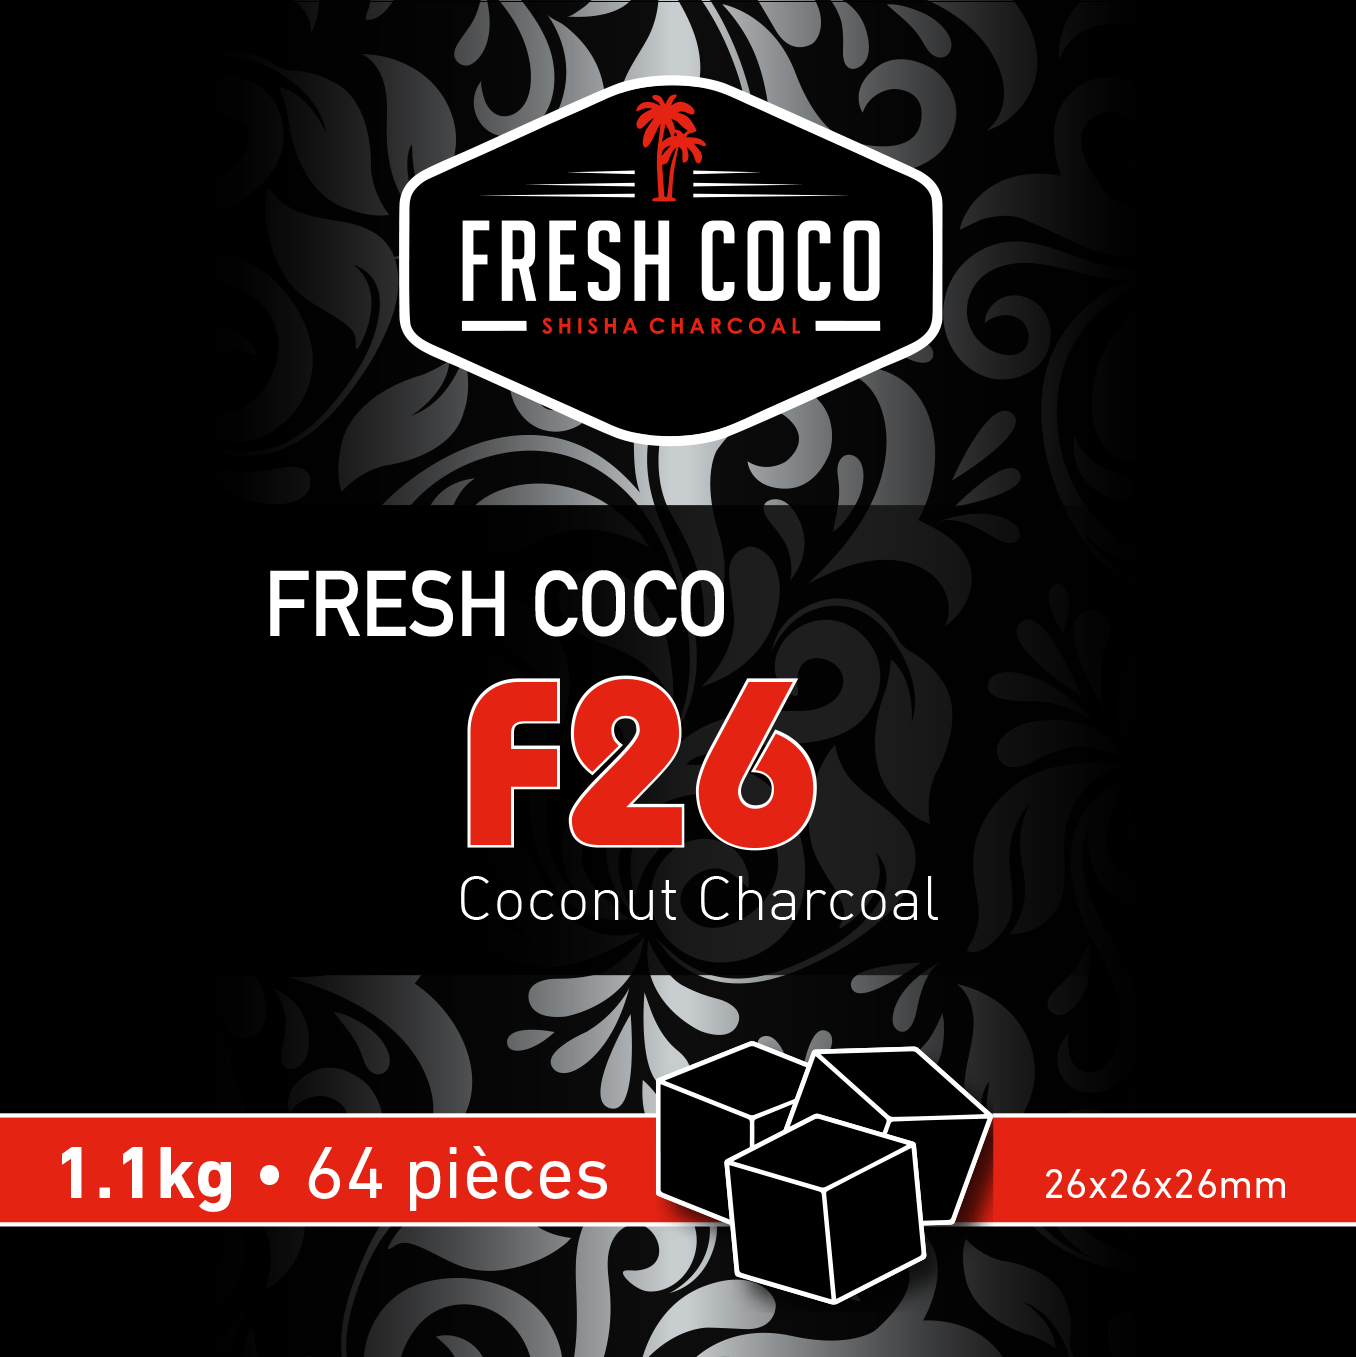 FRESH COCO - SHISHA CHARCOAL - Fresh Coco Distribution